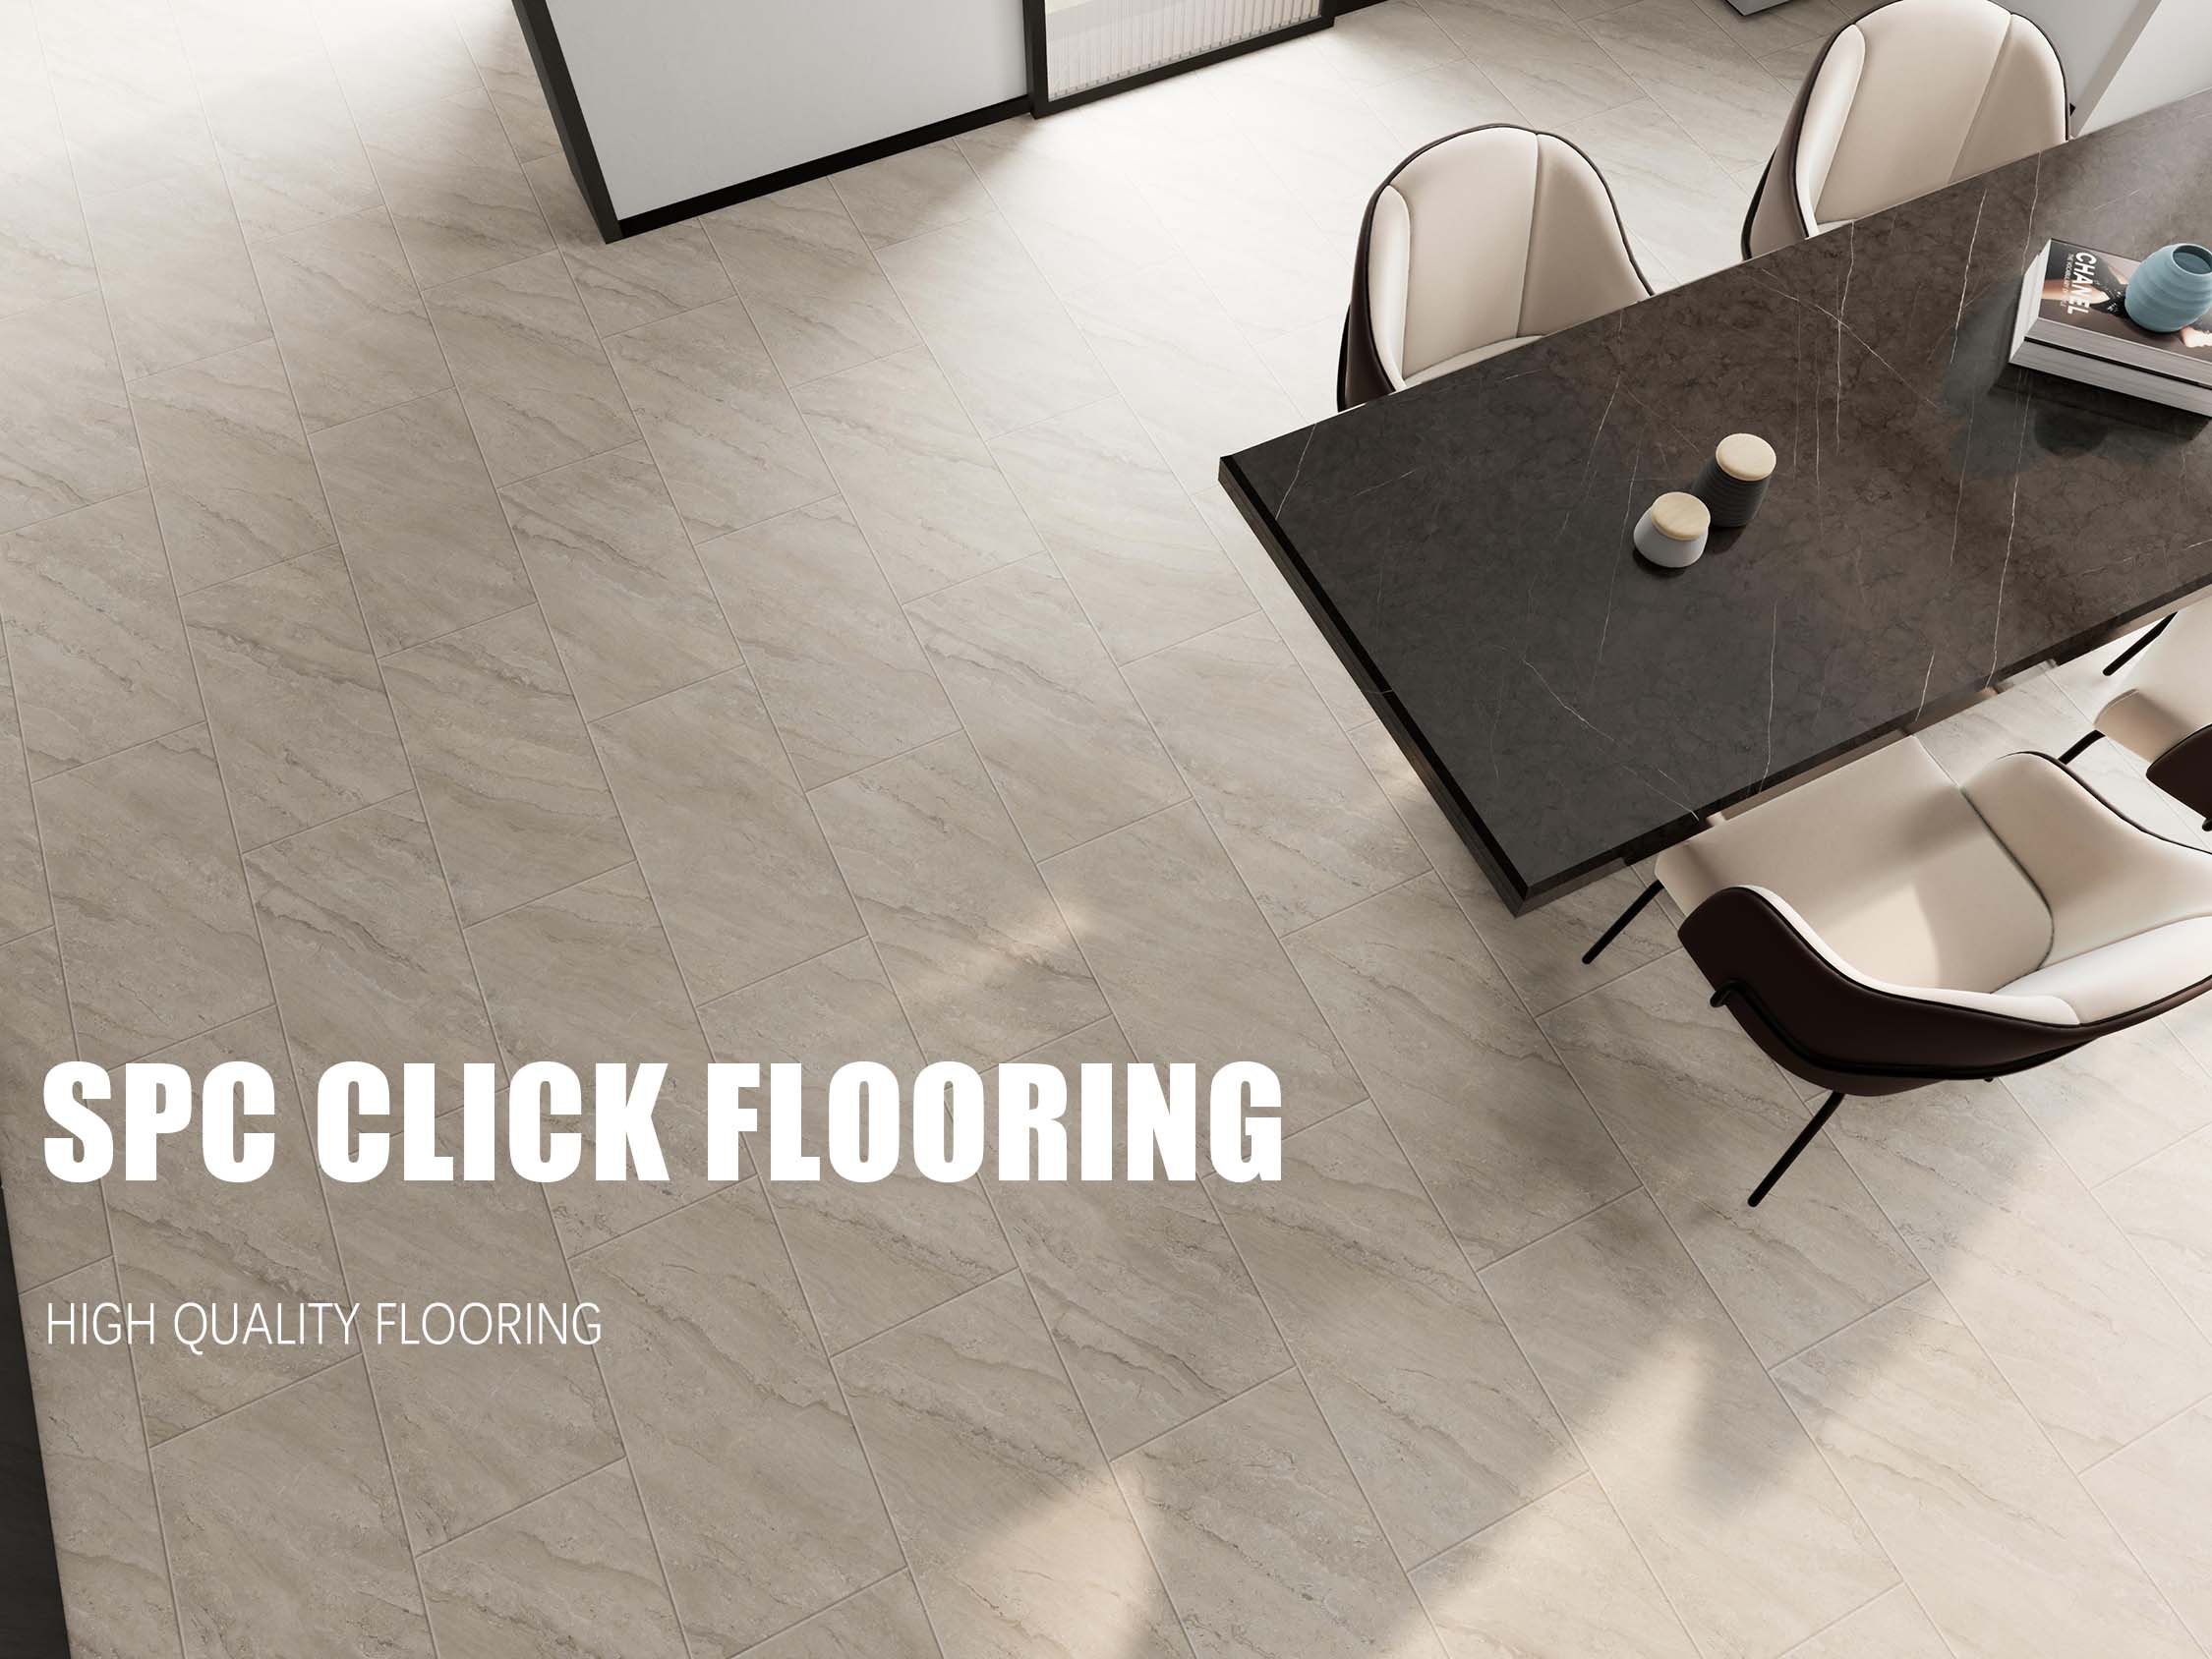 5mm SPC flooring